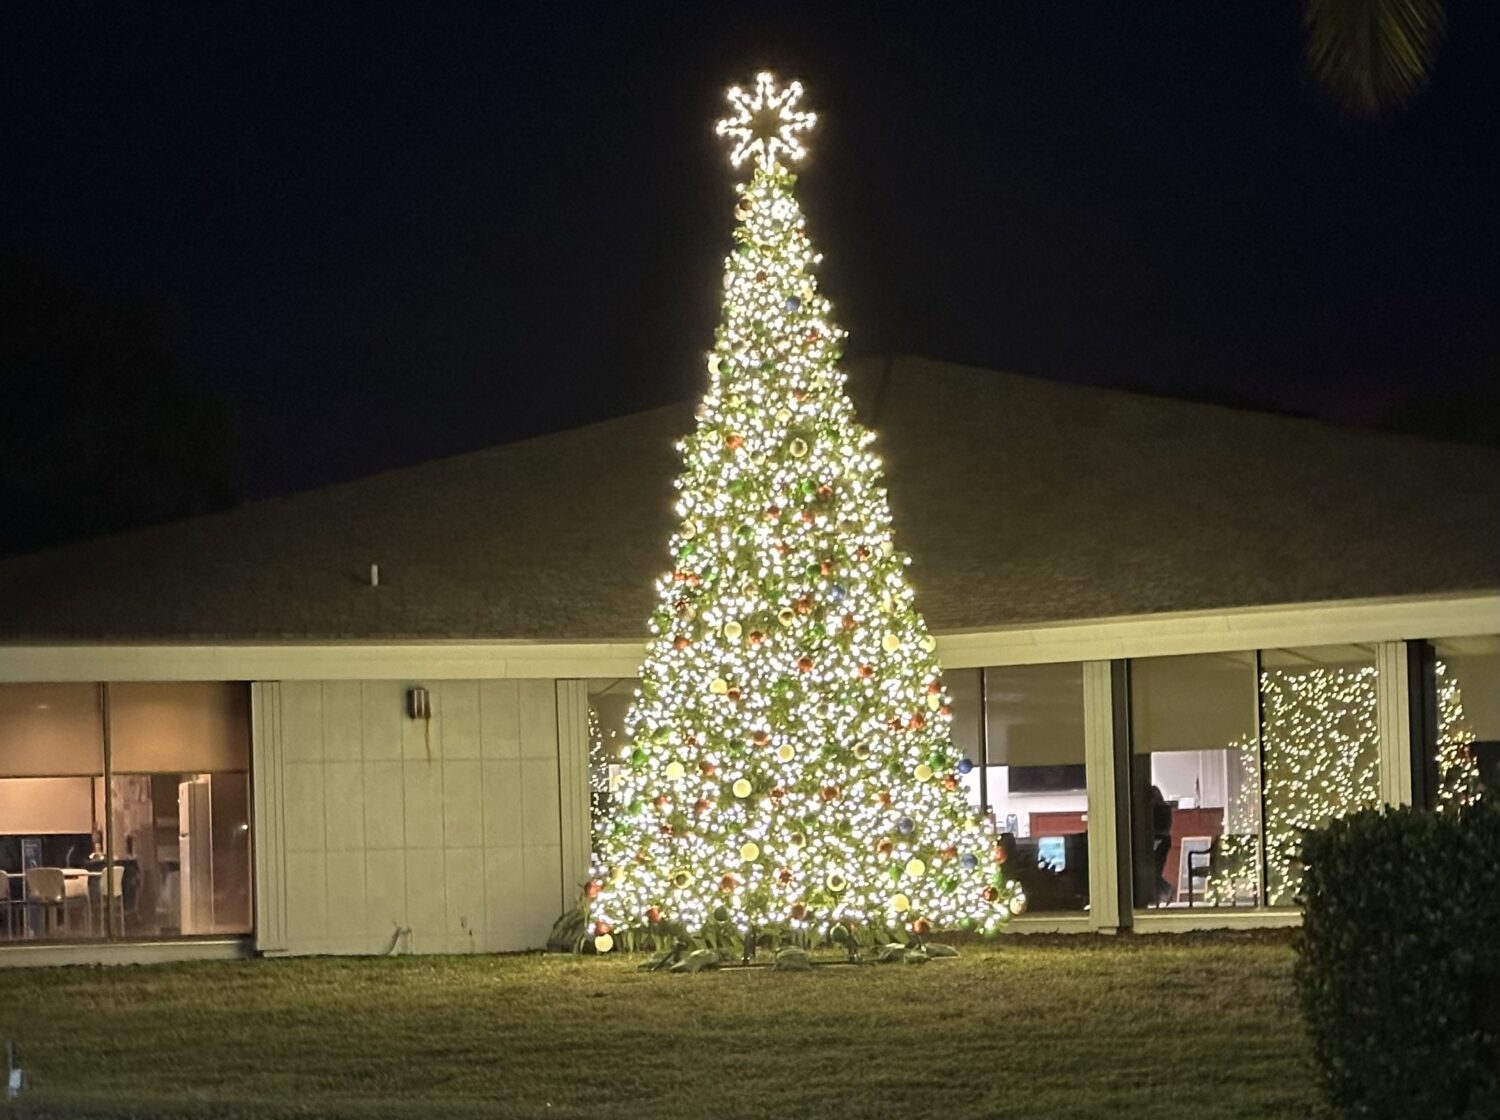 New Christmas tree de-lightful